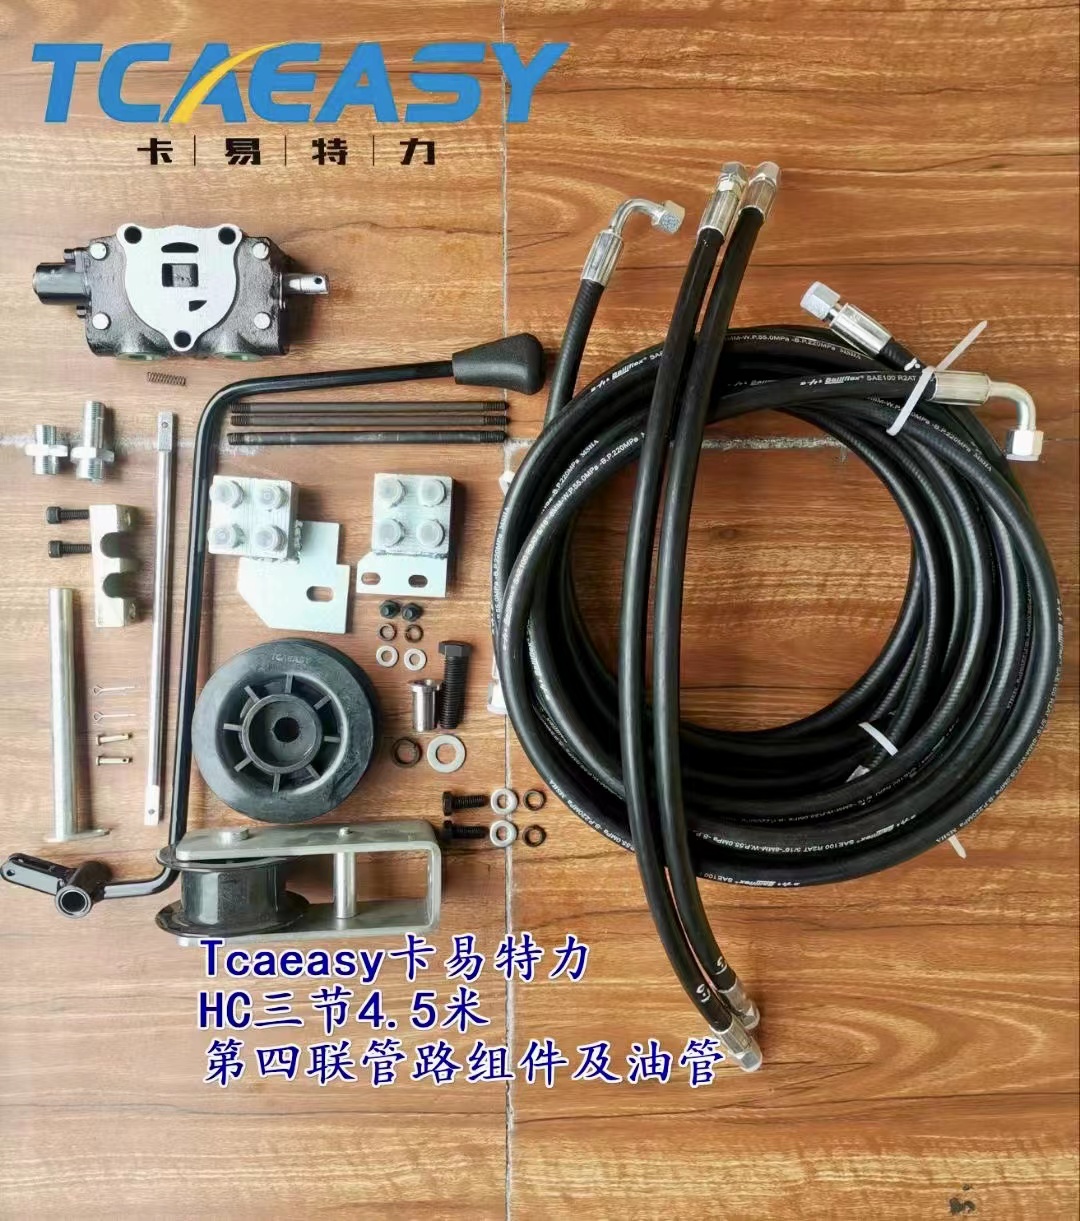 HANGZHOU Forklift Attachment Tubing HC1005